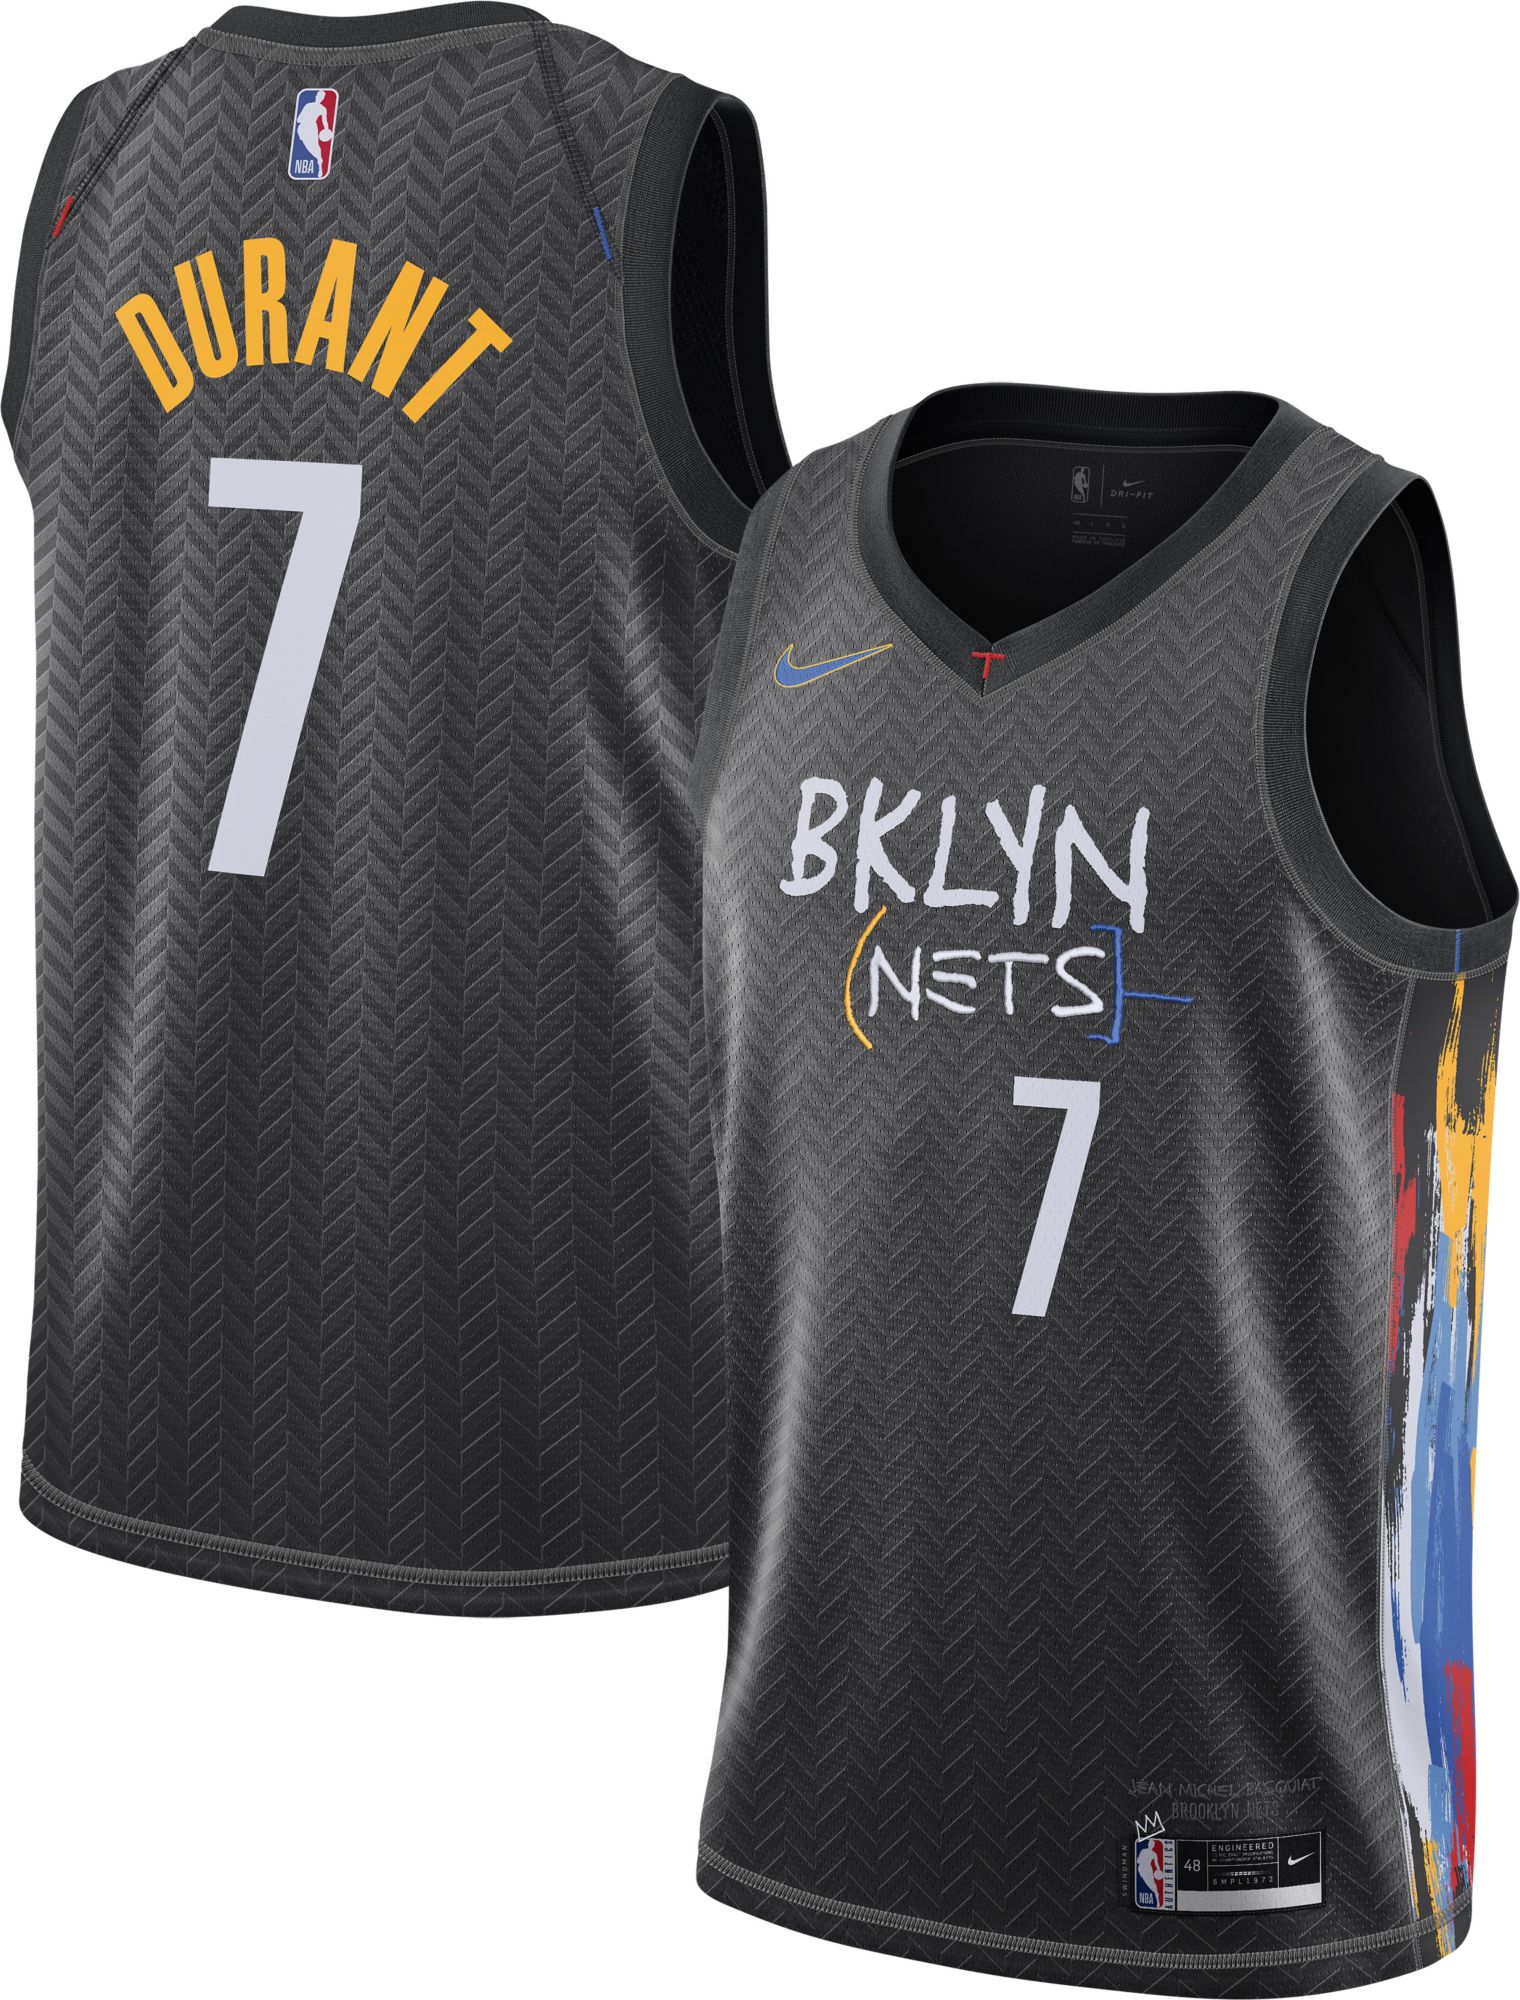 2021 Kevin Durant #7 Trikot Brooklyn Nets Jersey Black City Edition Größe S-2XL 